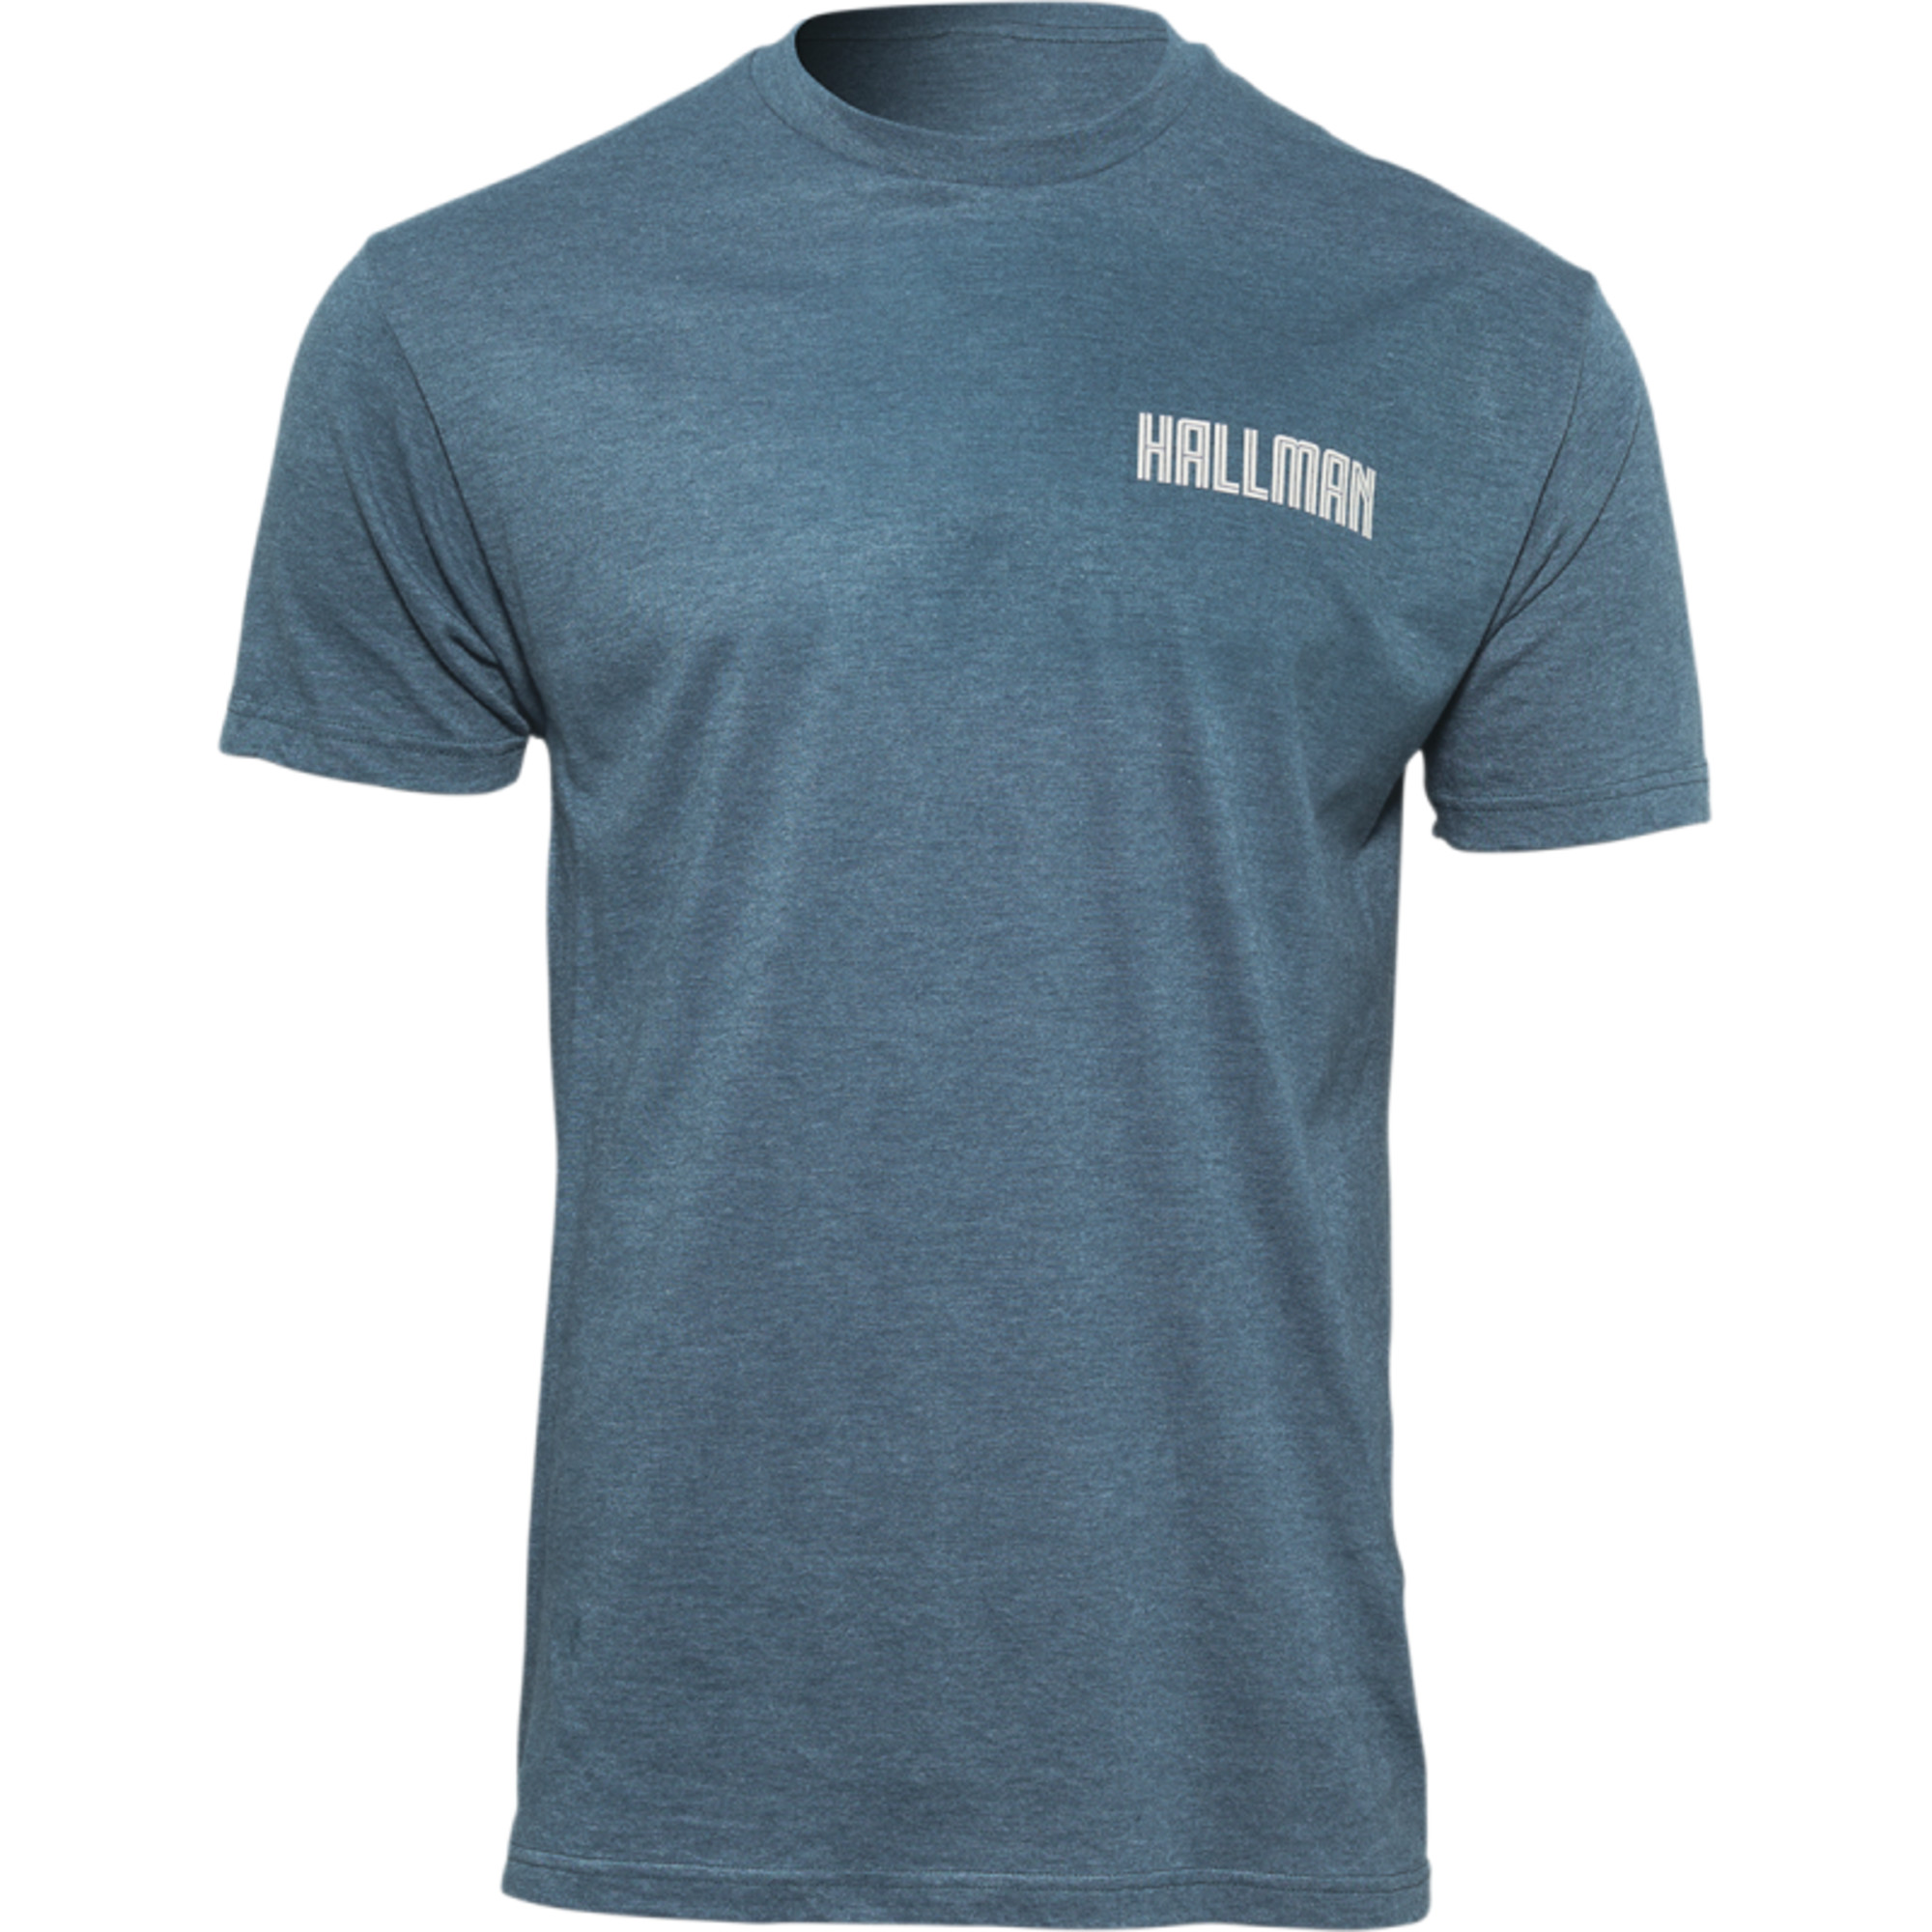 thor t-shirt shirts for men hallman draft